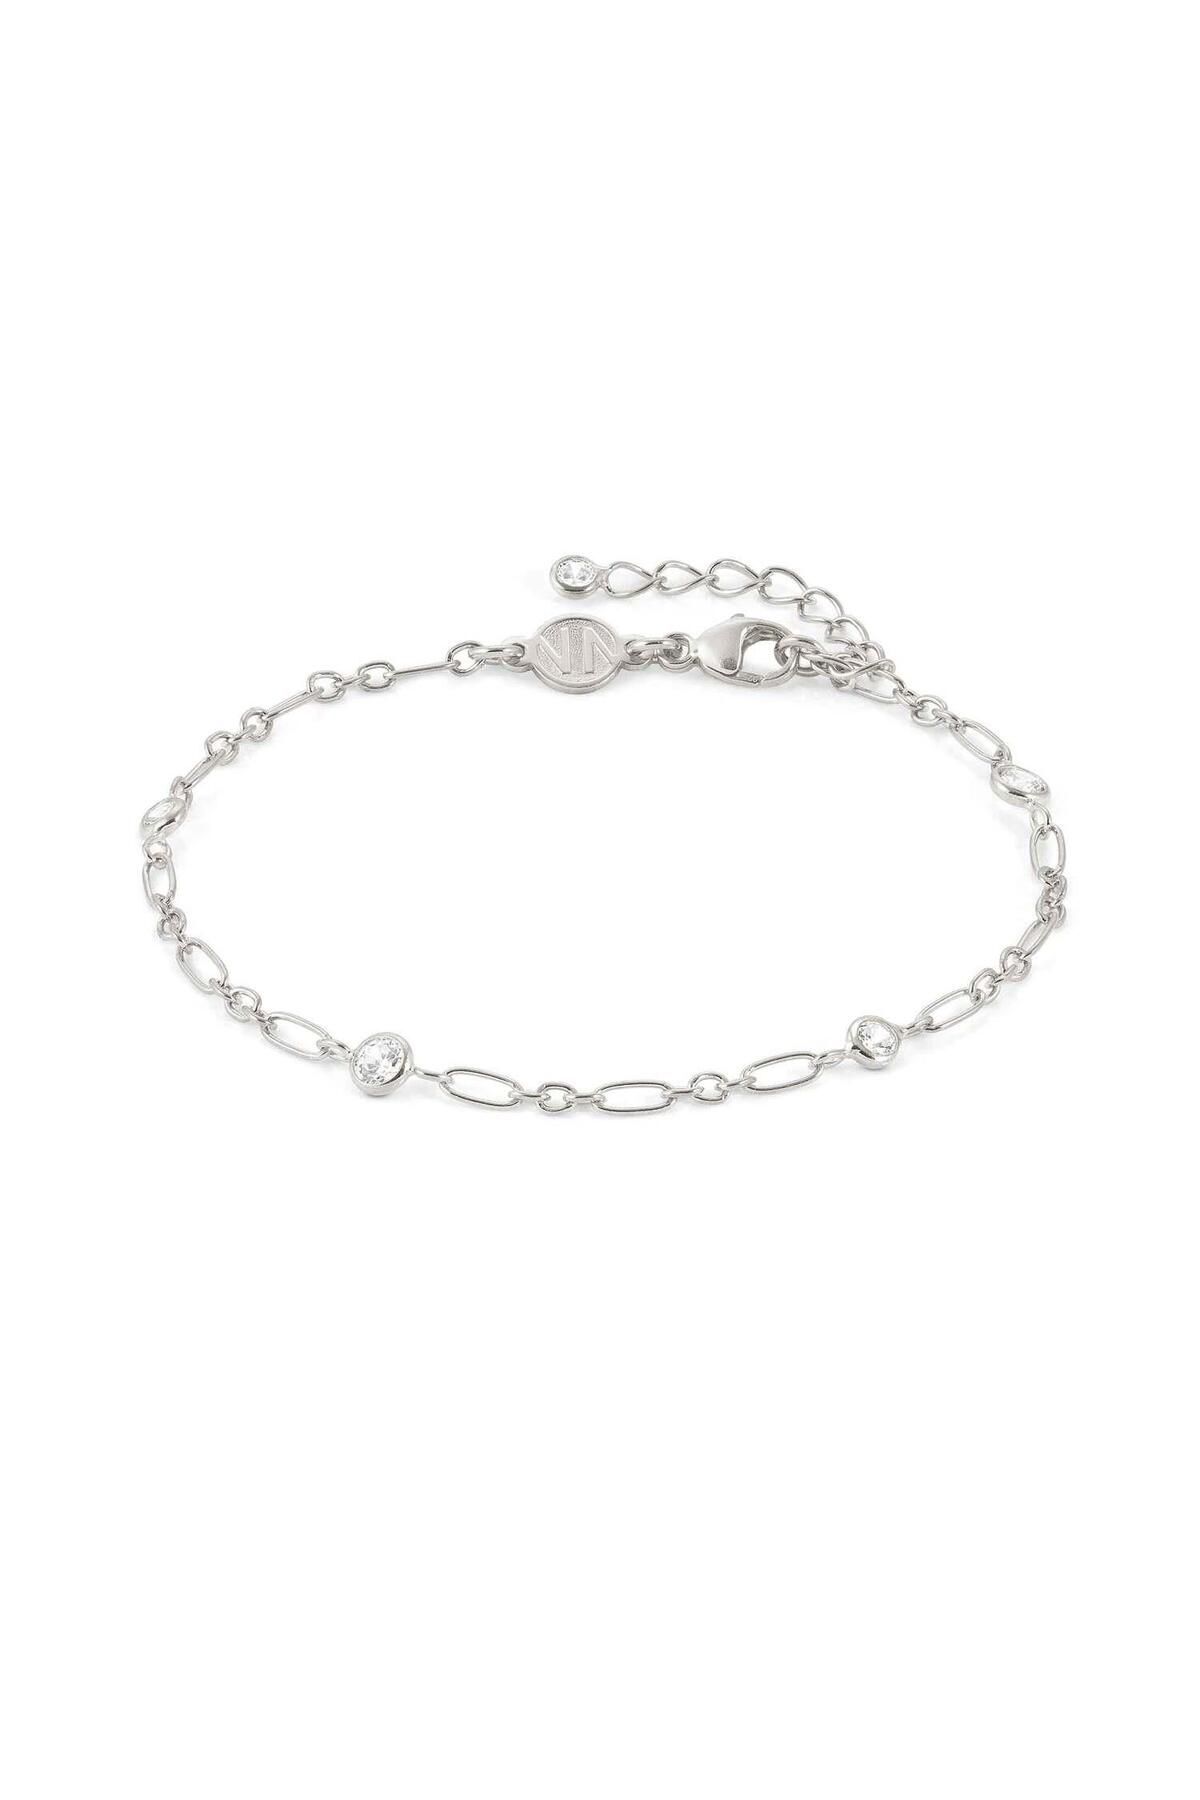 NOMİNATİON Bella Bracelet Ed, Detaıls In 925 Silver And Cz (036_elongated Chain)